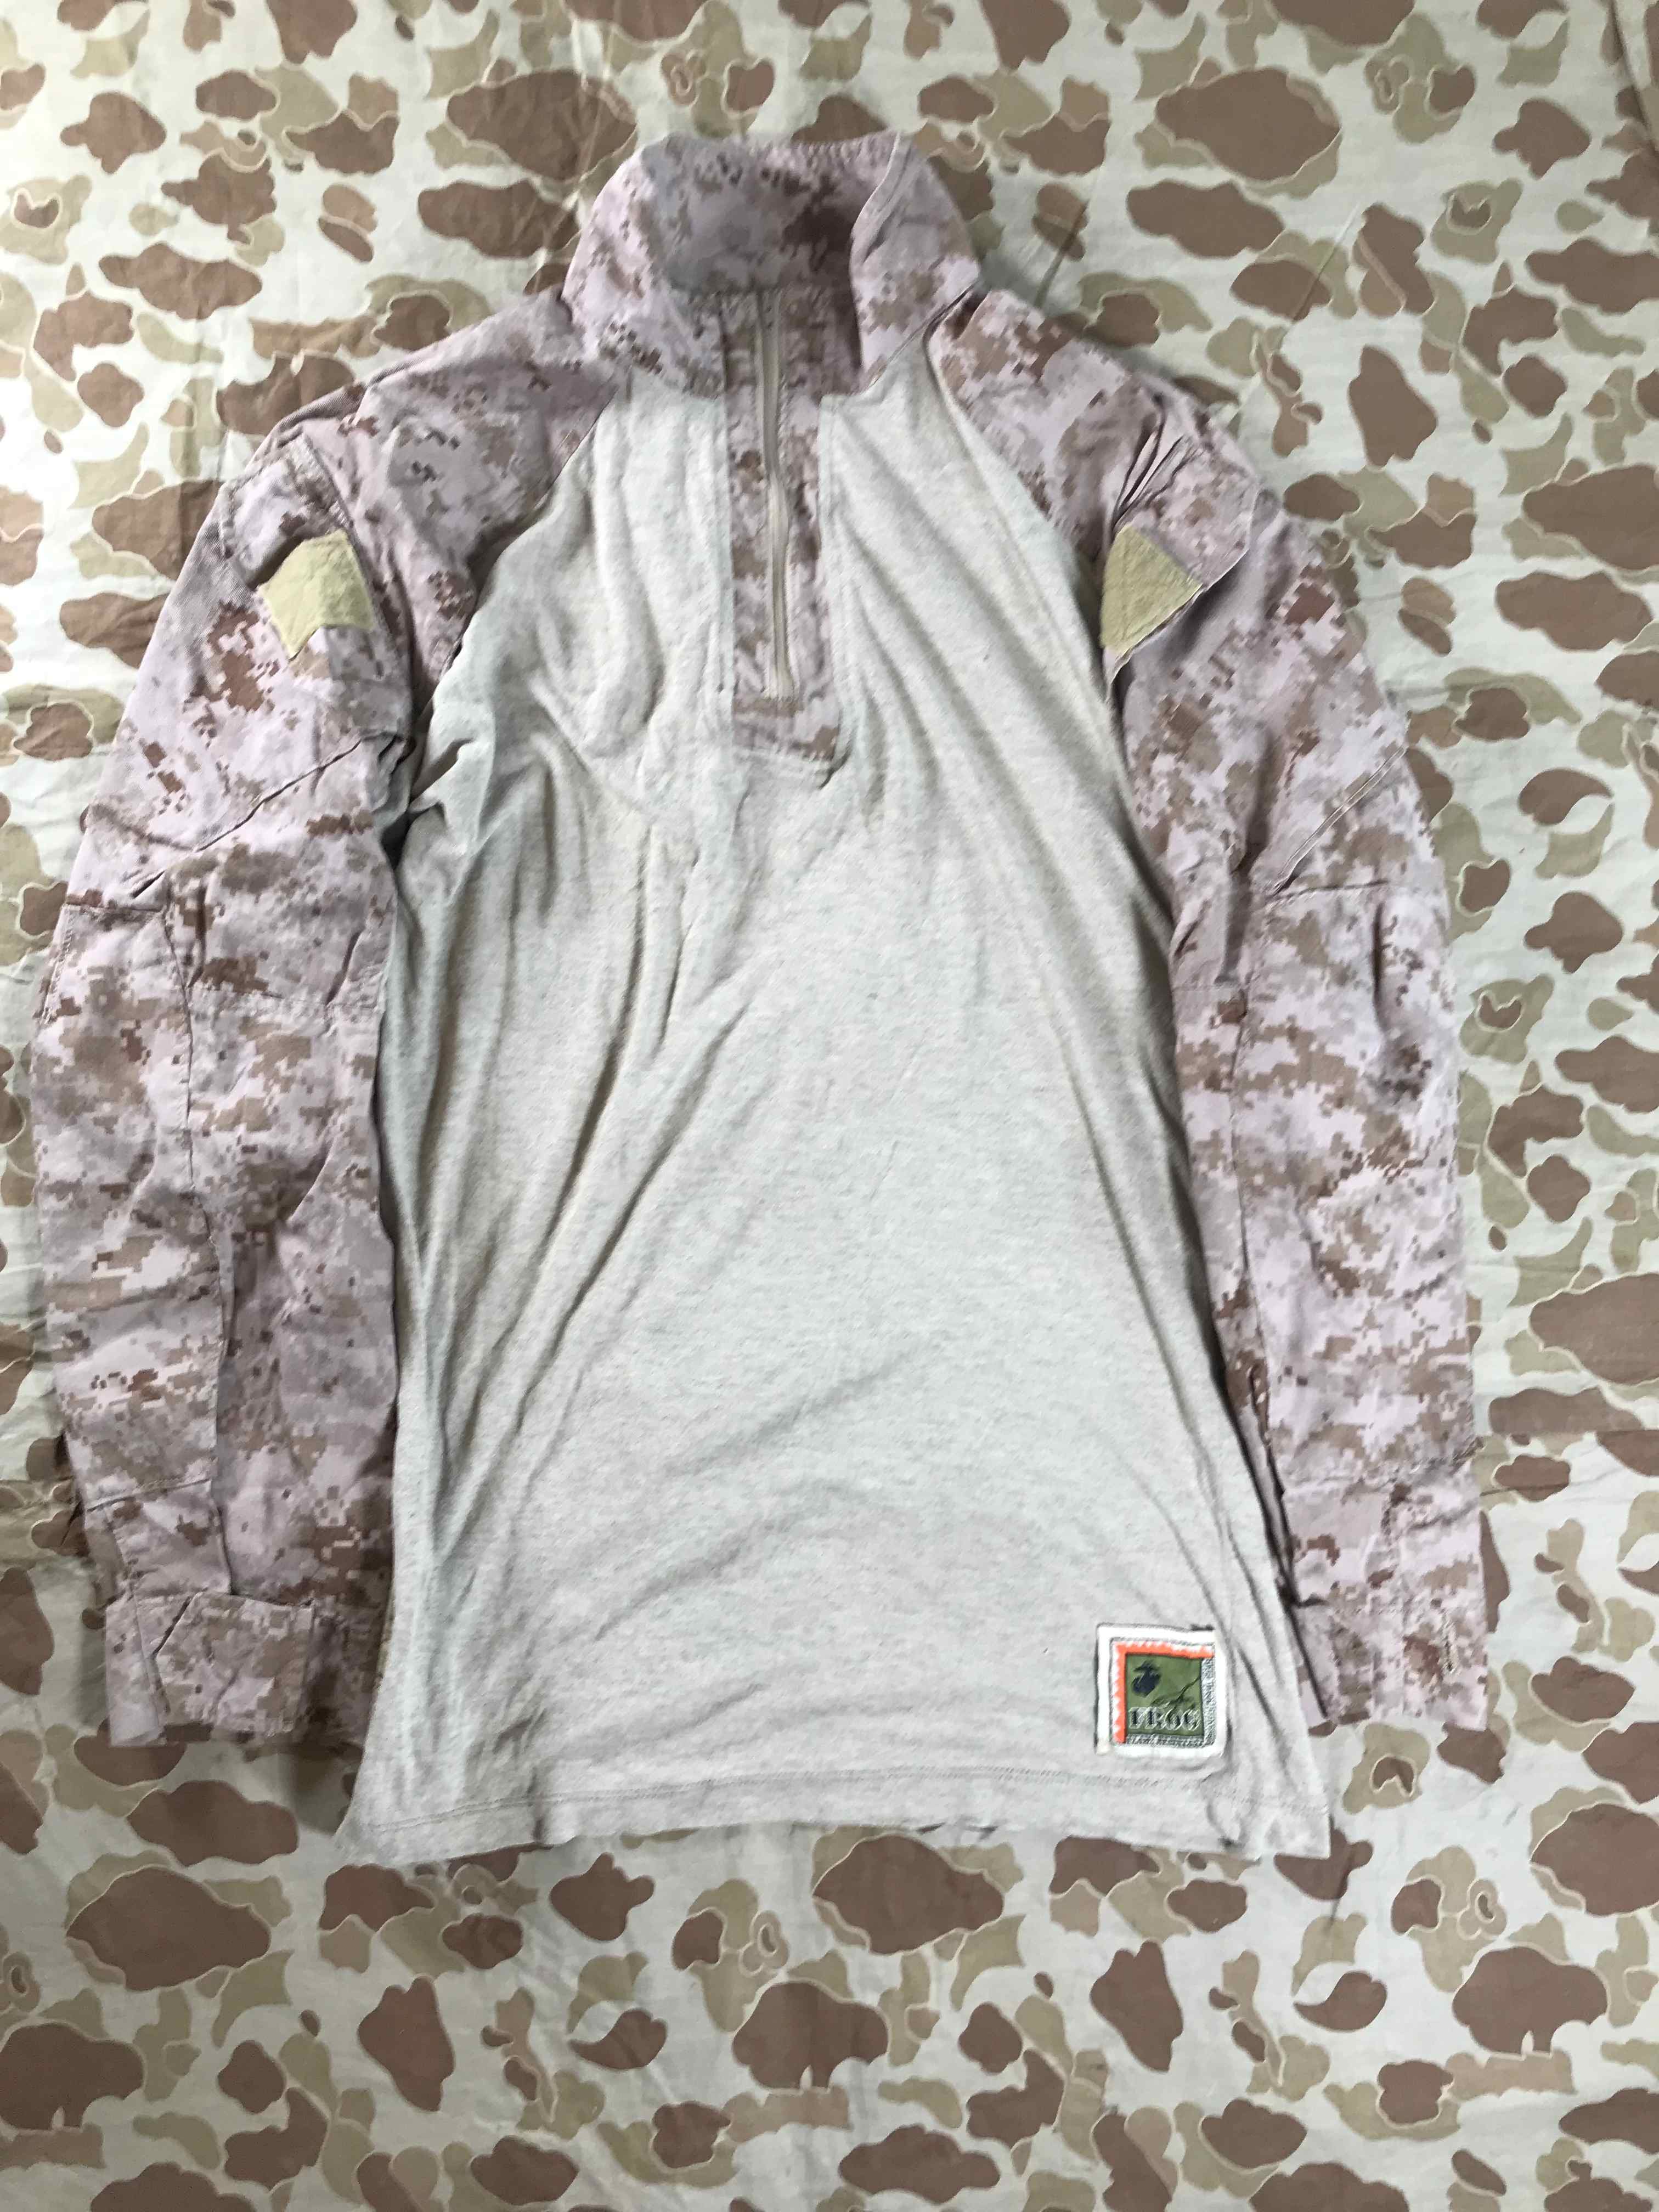 Combat Shirt MARPAT DESERT Frog - Medium Long